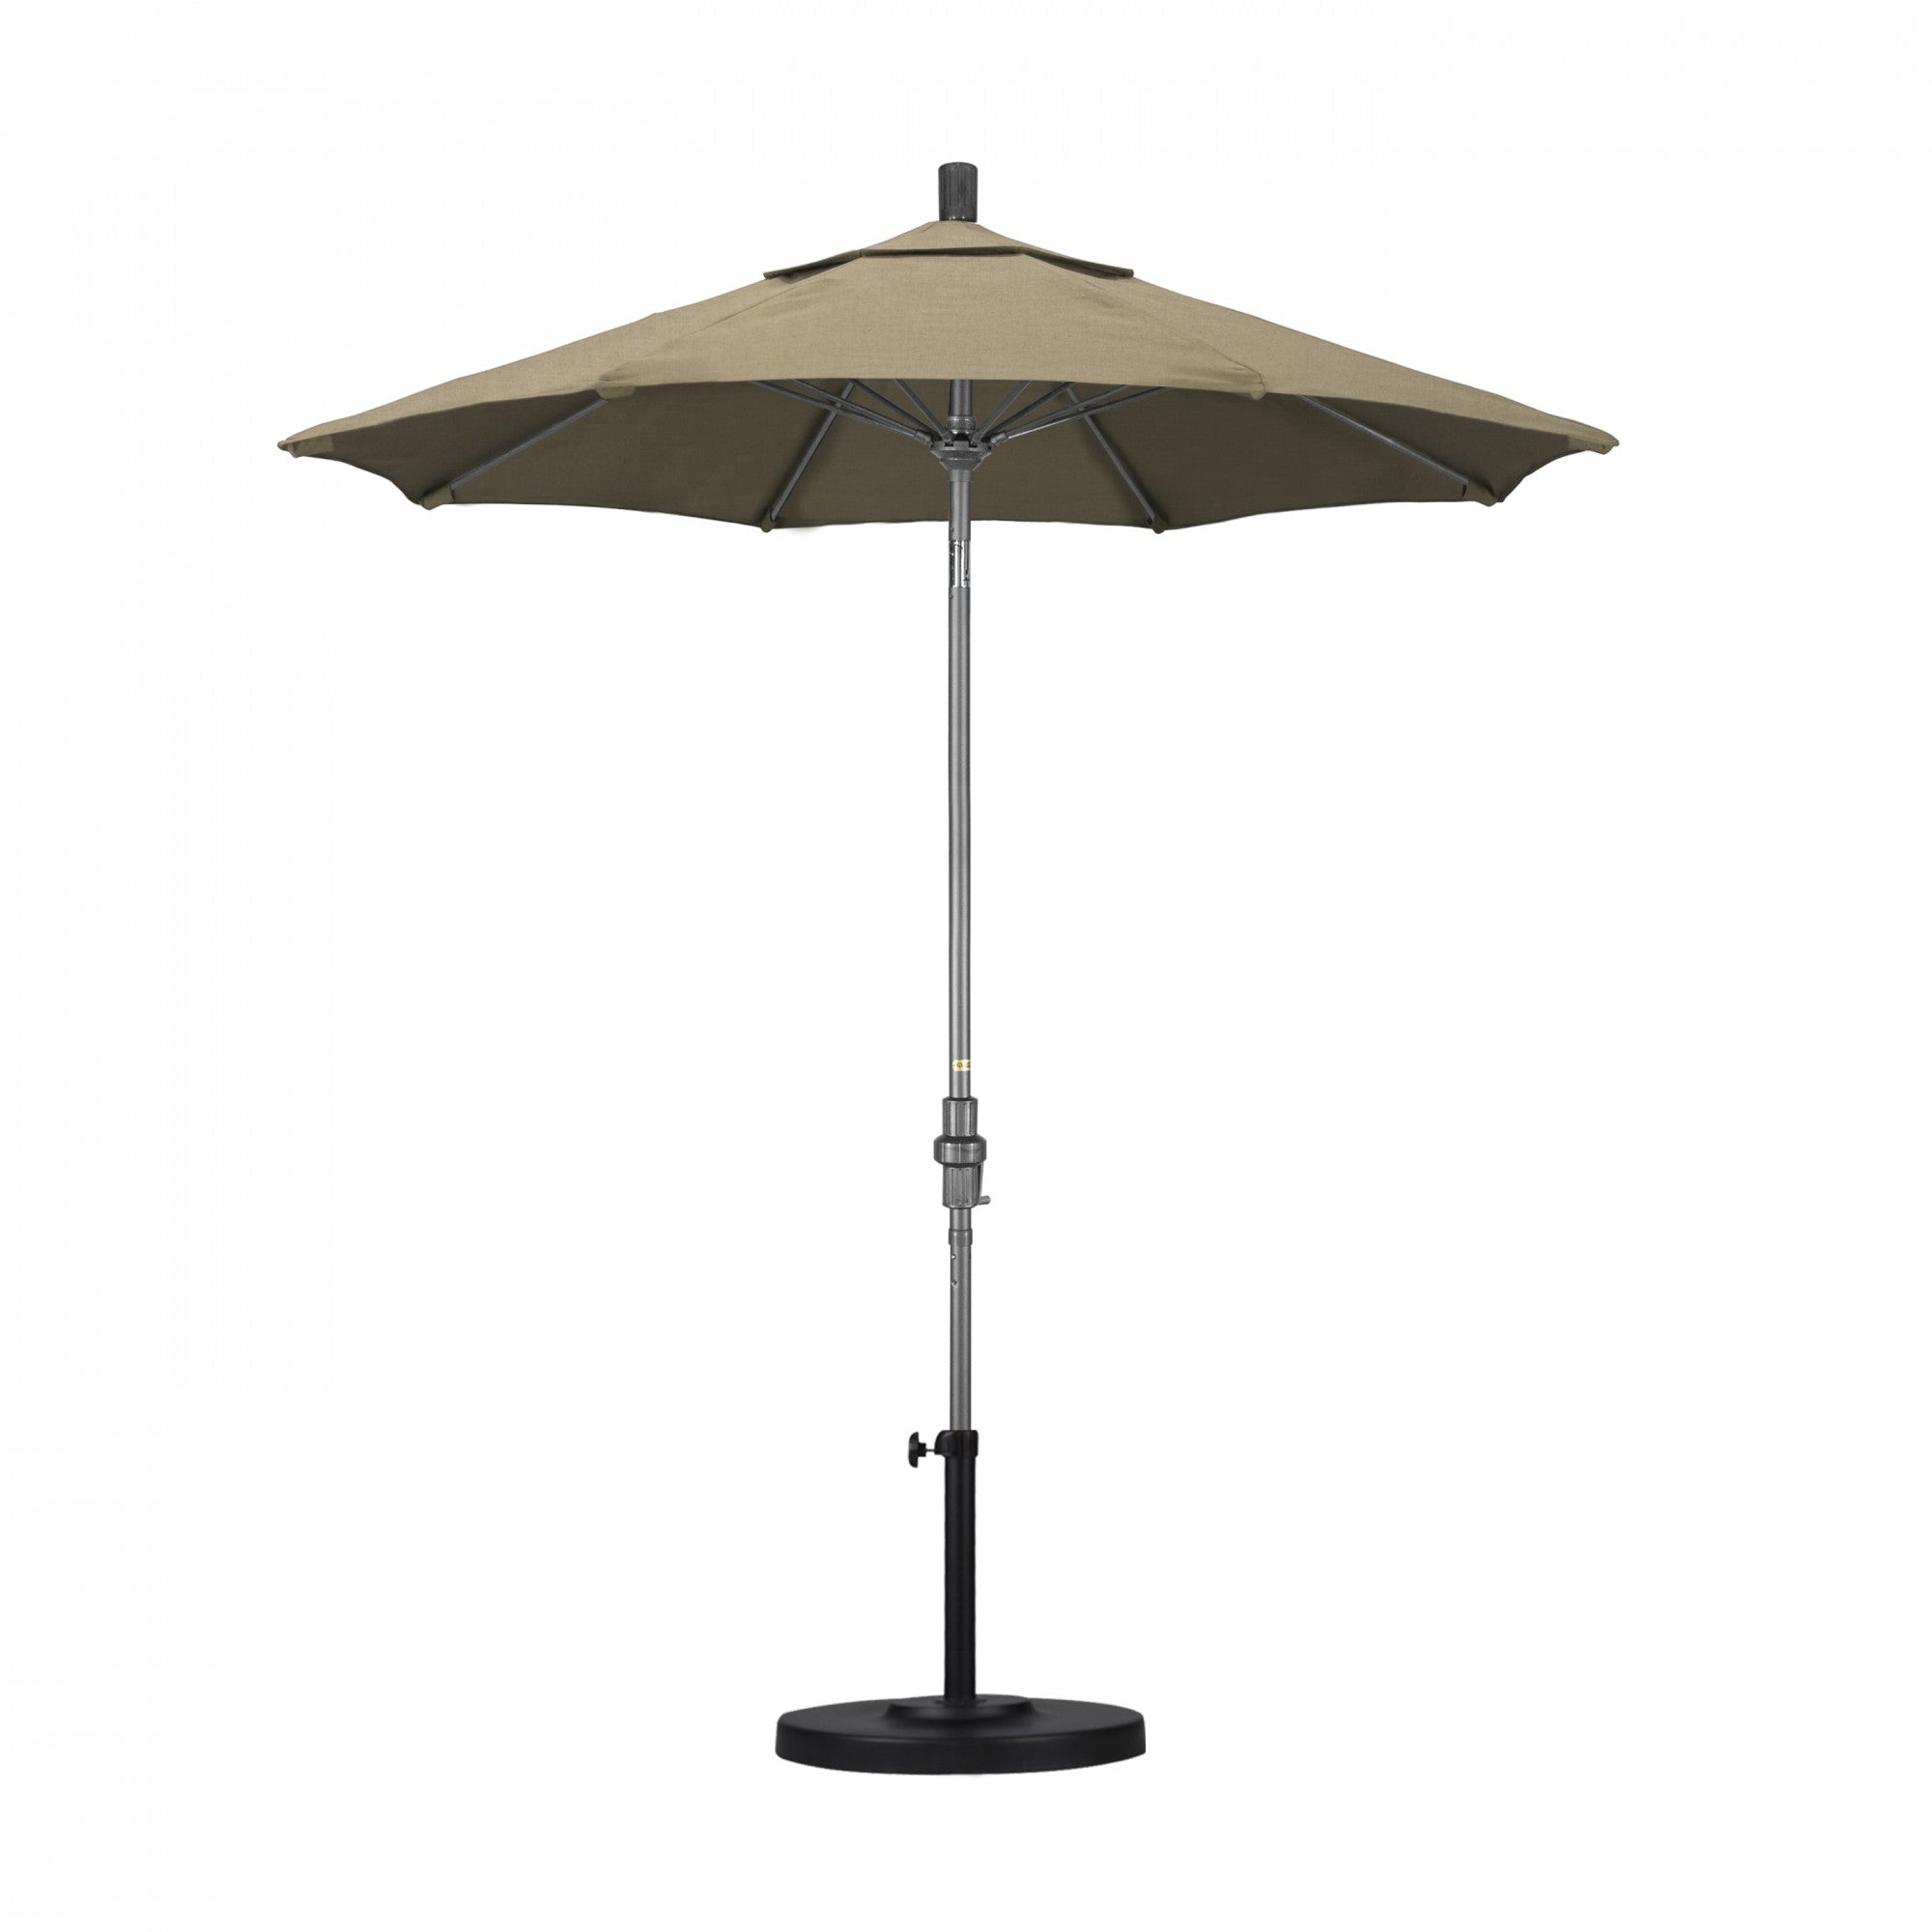 California Umbrella - 7.5' - Patio Umbrella Umbrella - Aluminum Pole - Heather Beige - Sunbrella  - GSCUF758010-5476